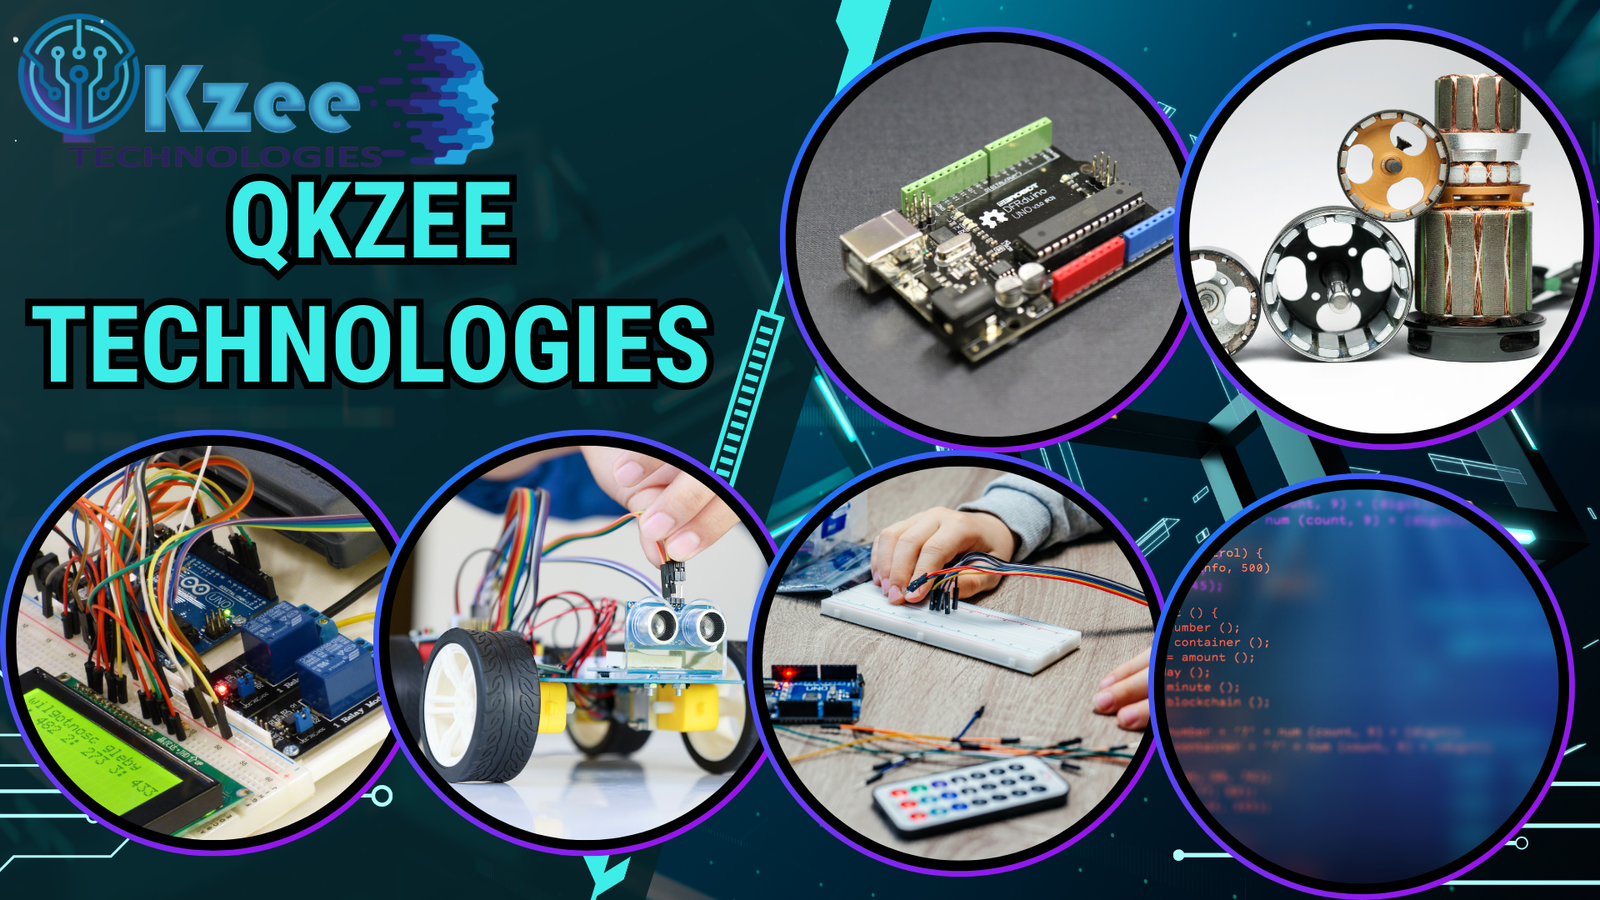 Qkzee technologies